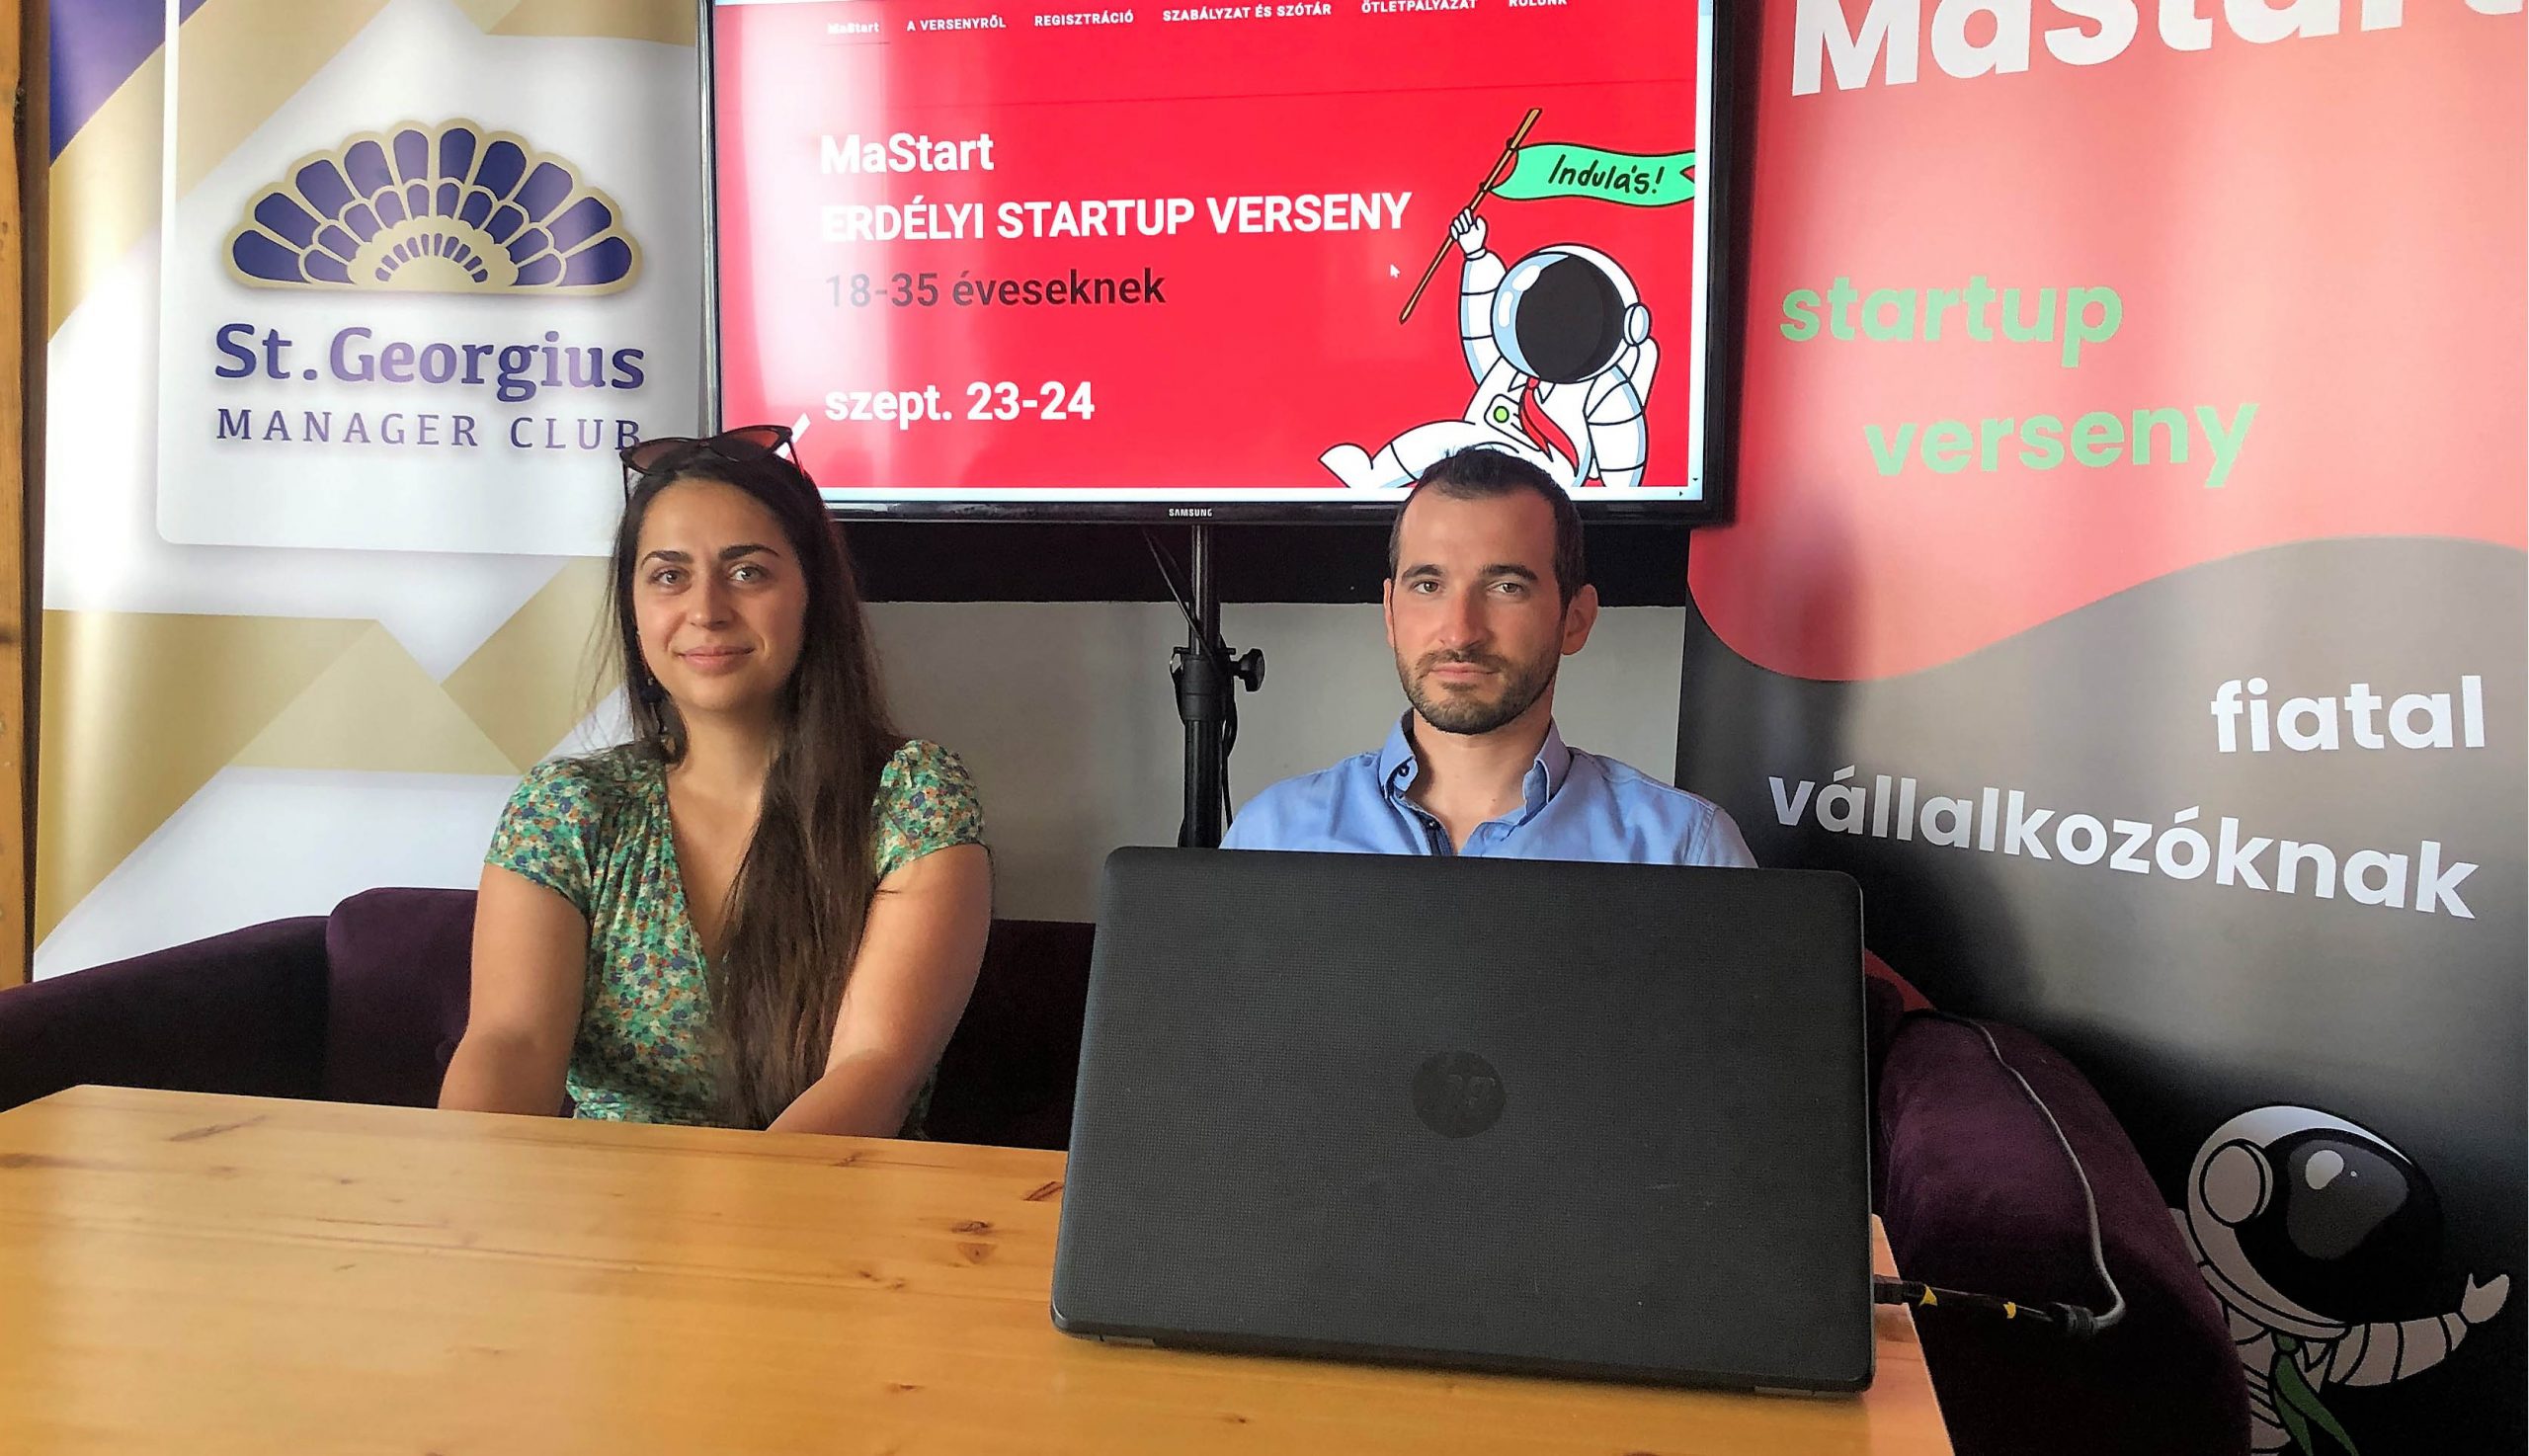 MaStart: erdélyi startup verseny